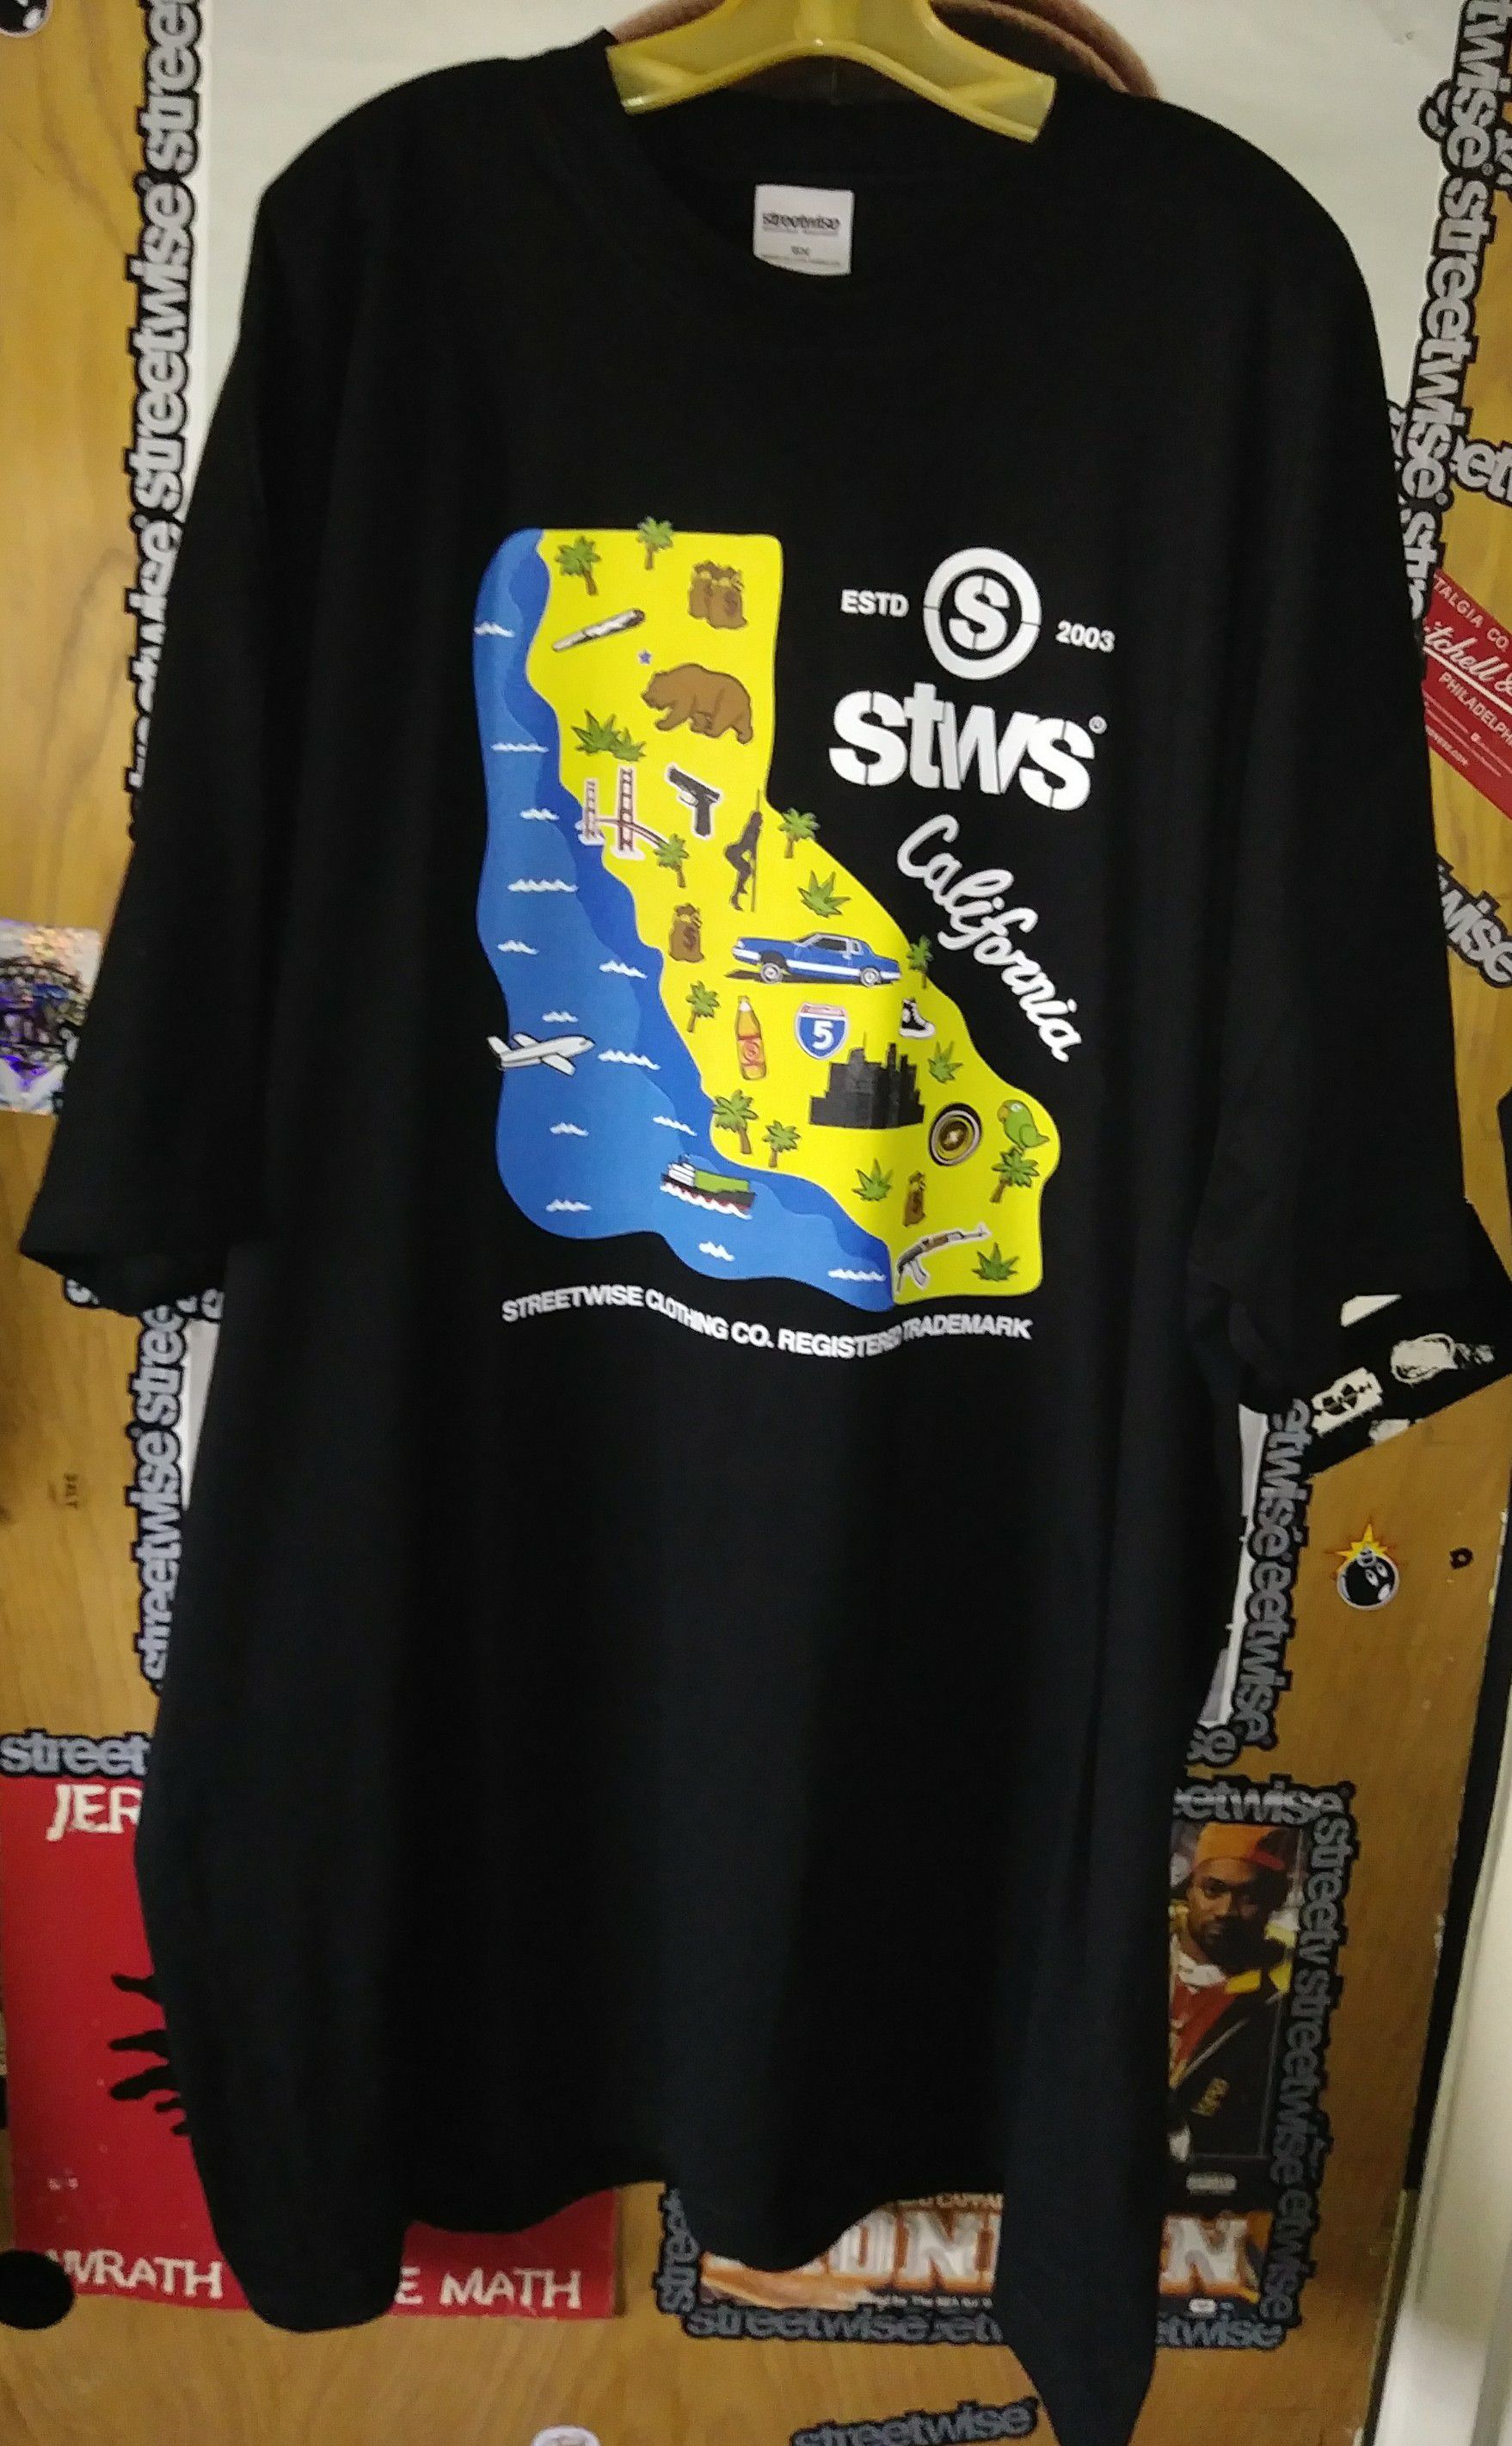 StreetWise clothing tshirt size 5XL